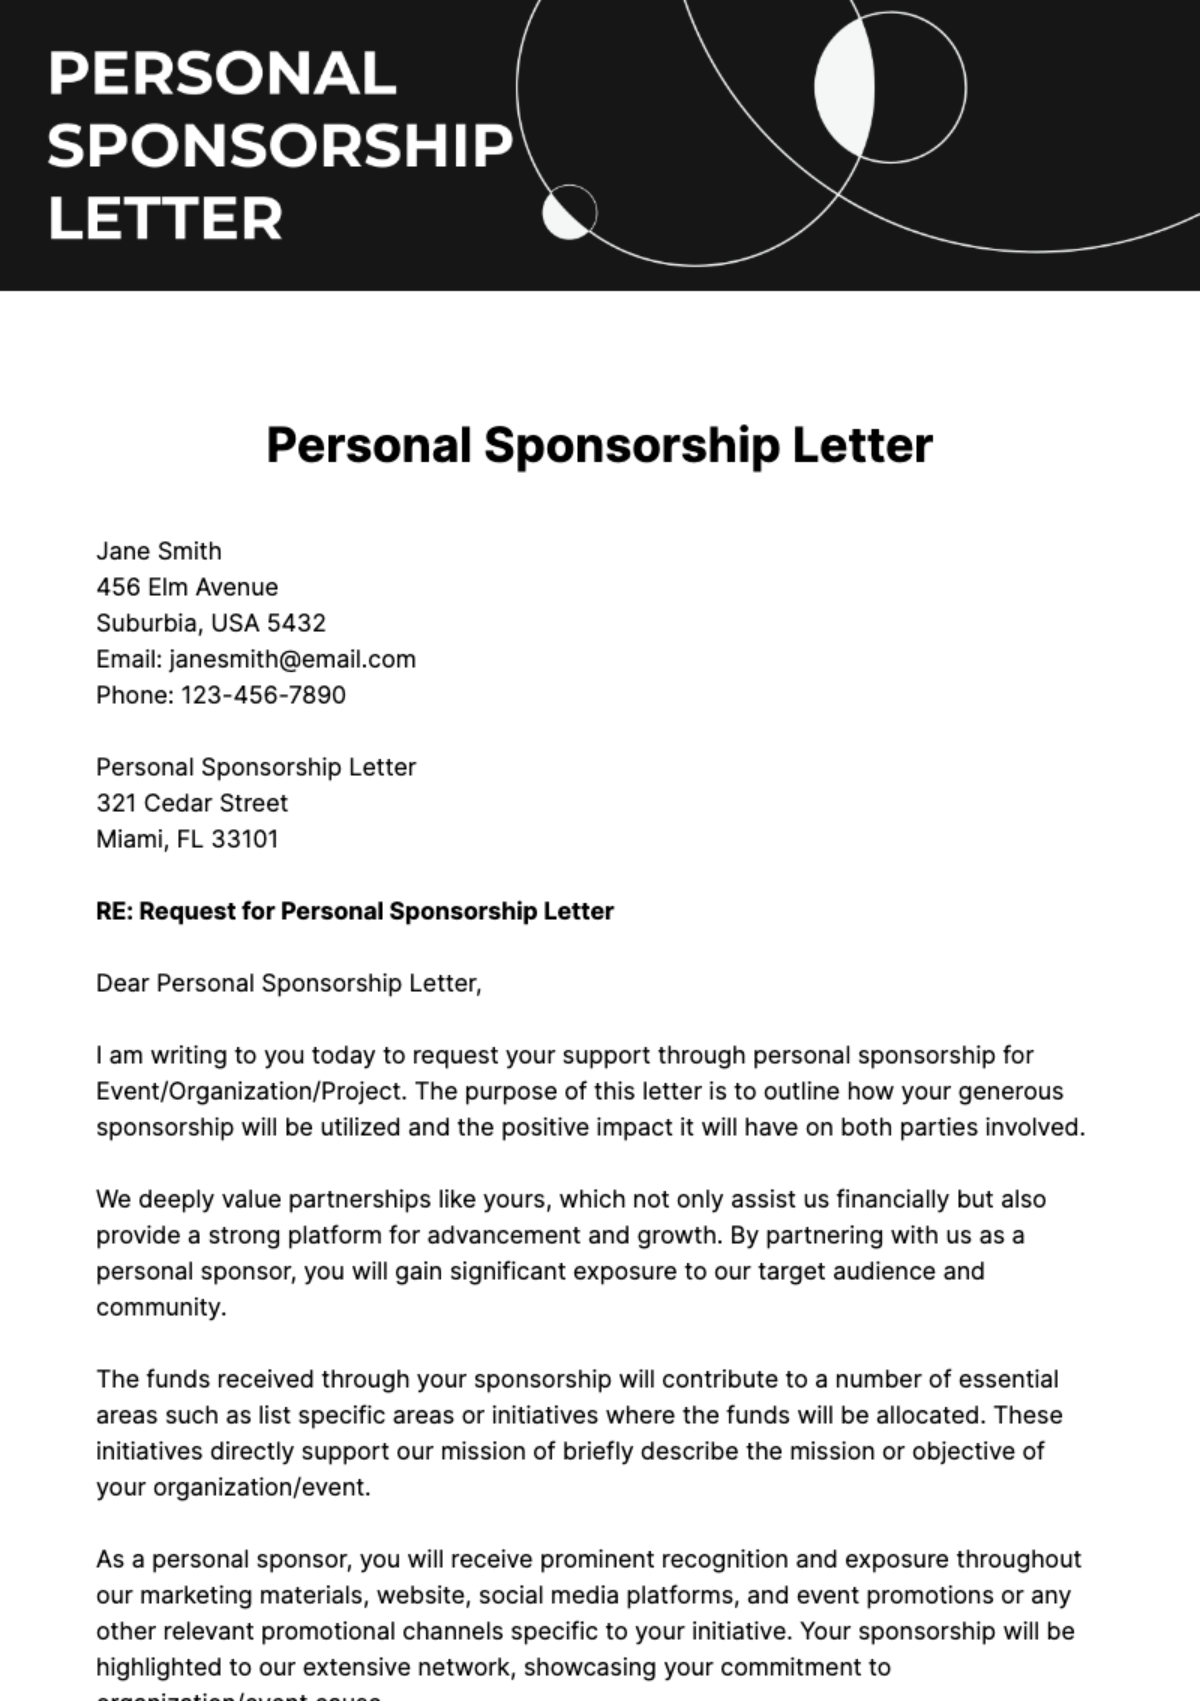 Personal Sponsorship Letter Template